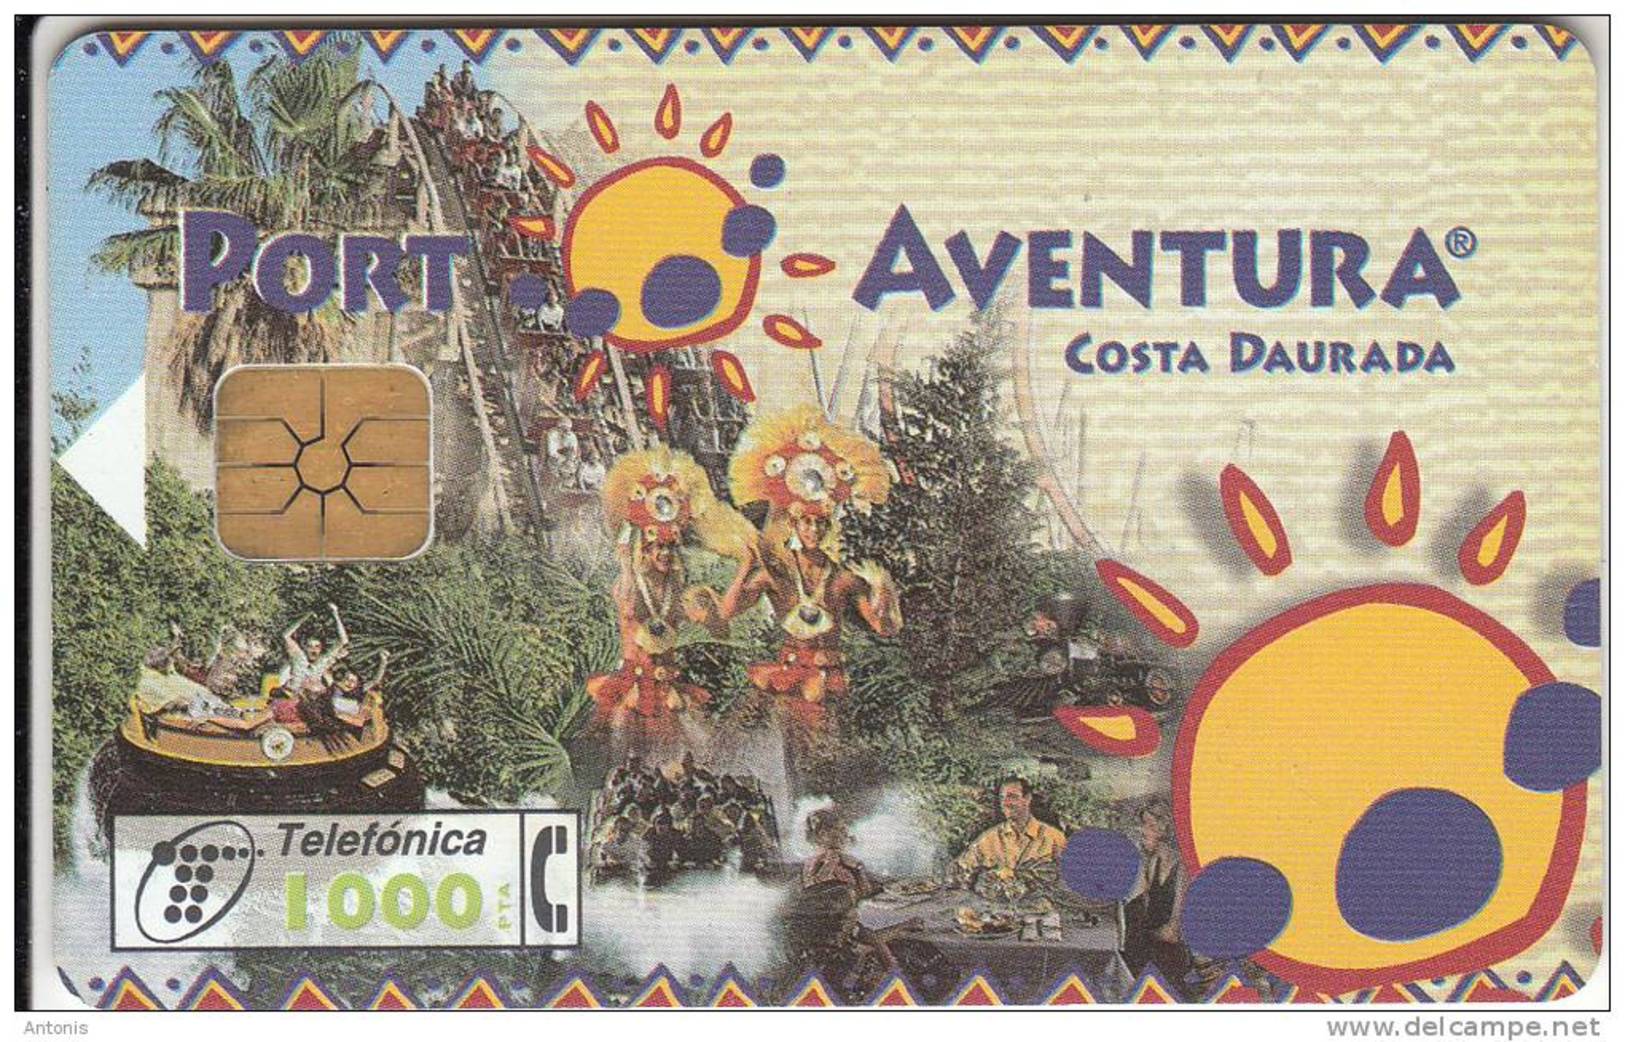 SPAIN - Port Aventura, 03/98, Used - Basic Issues